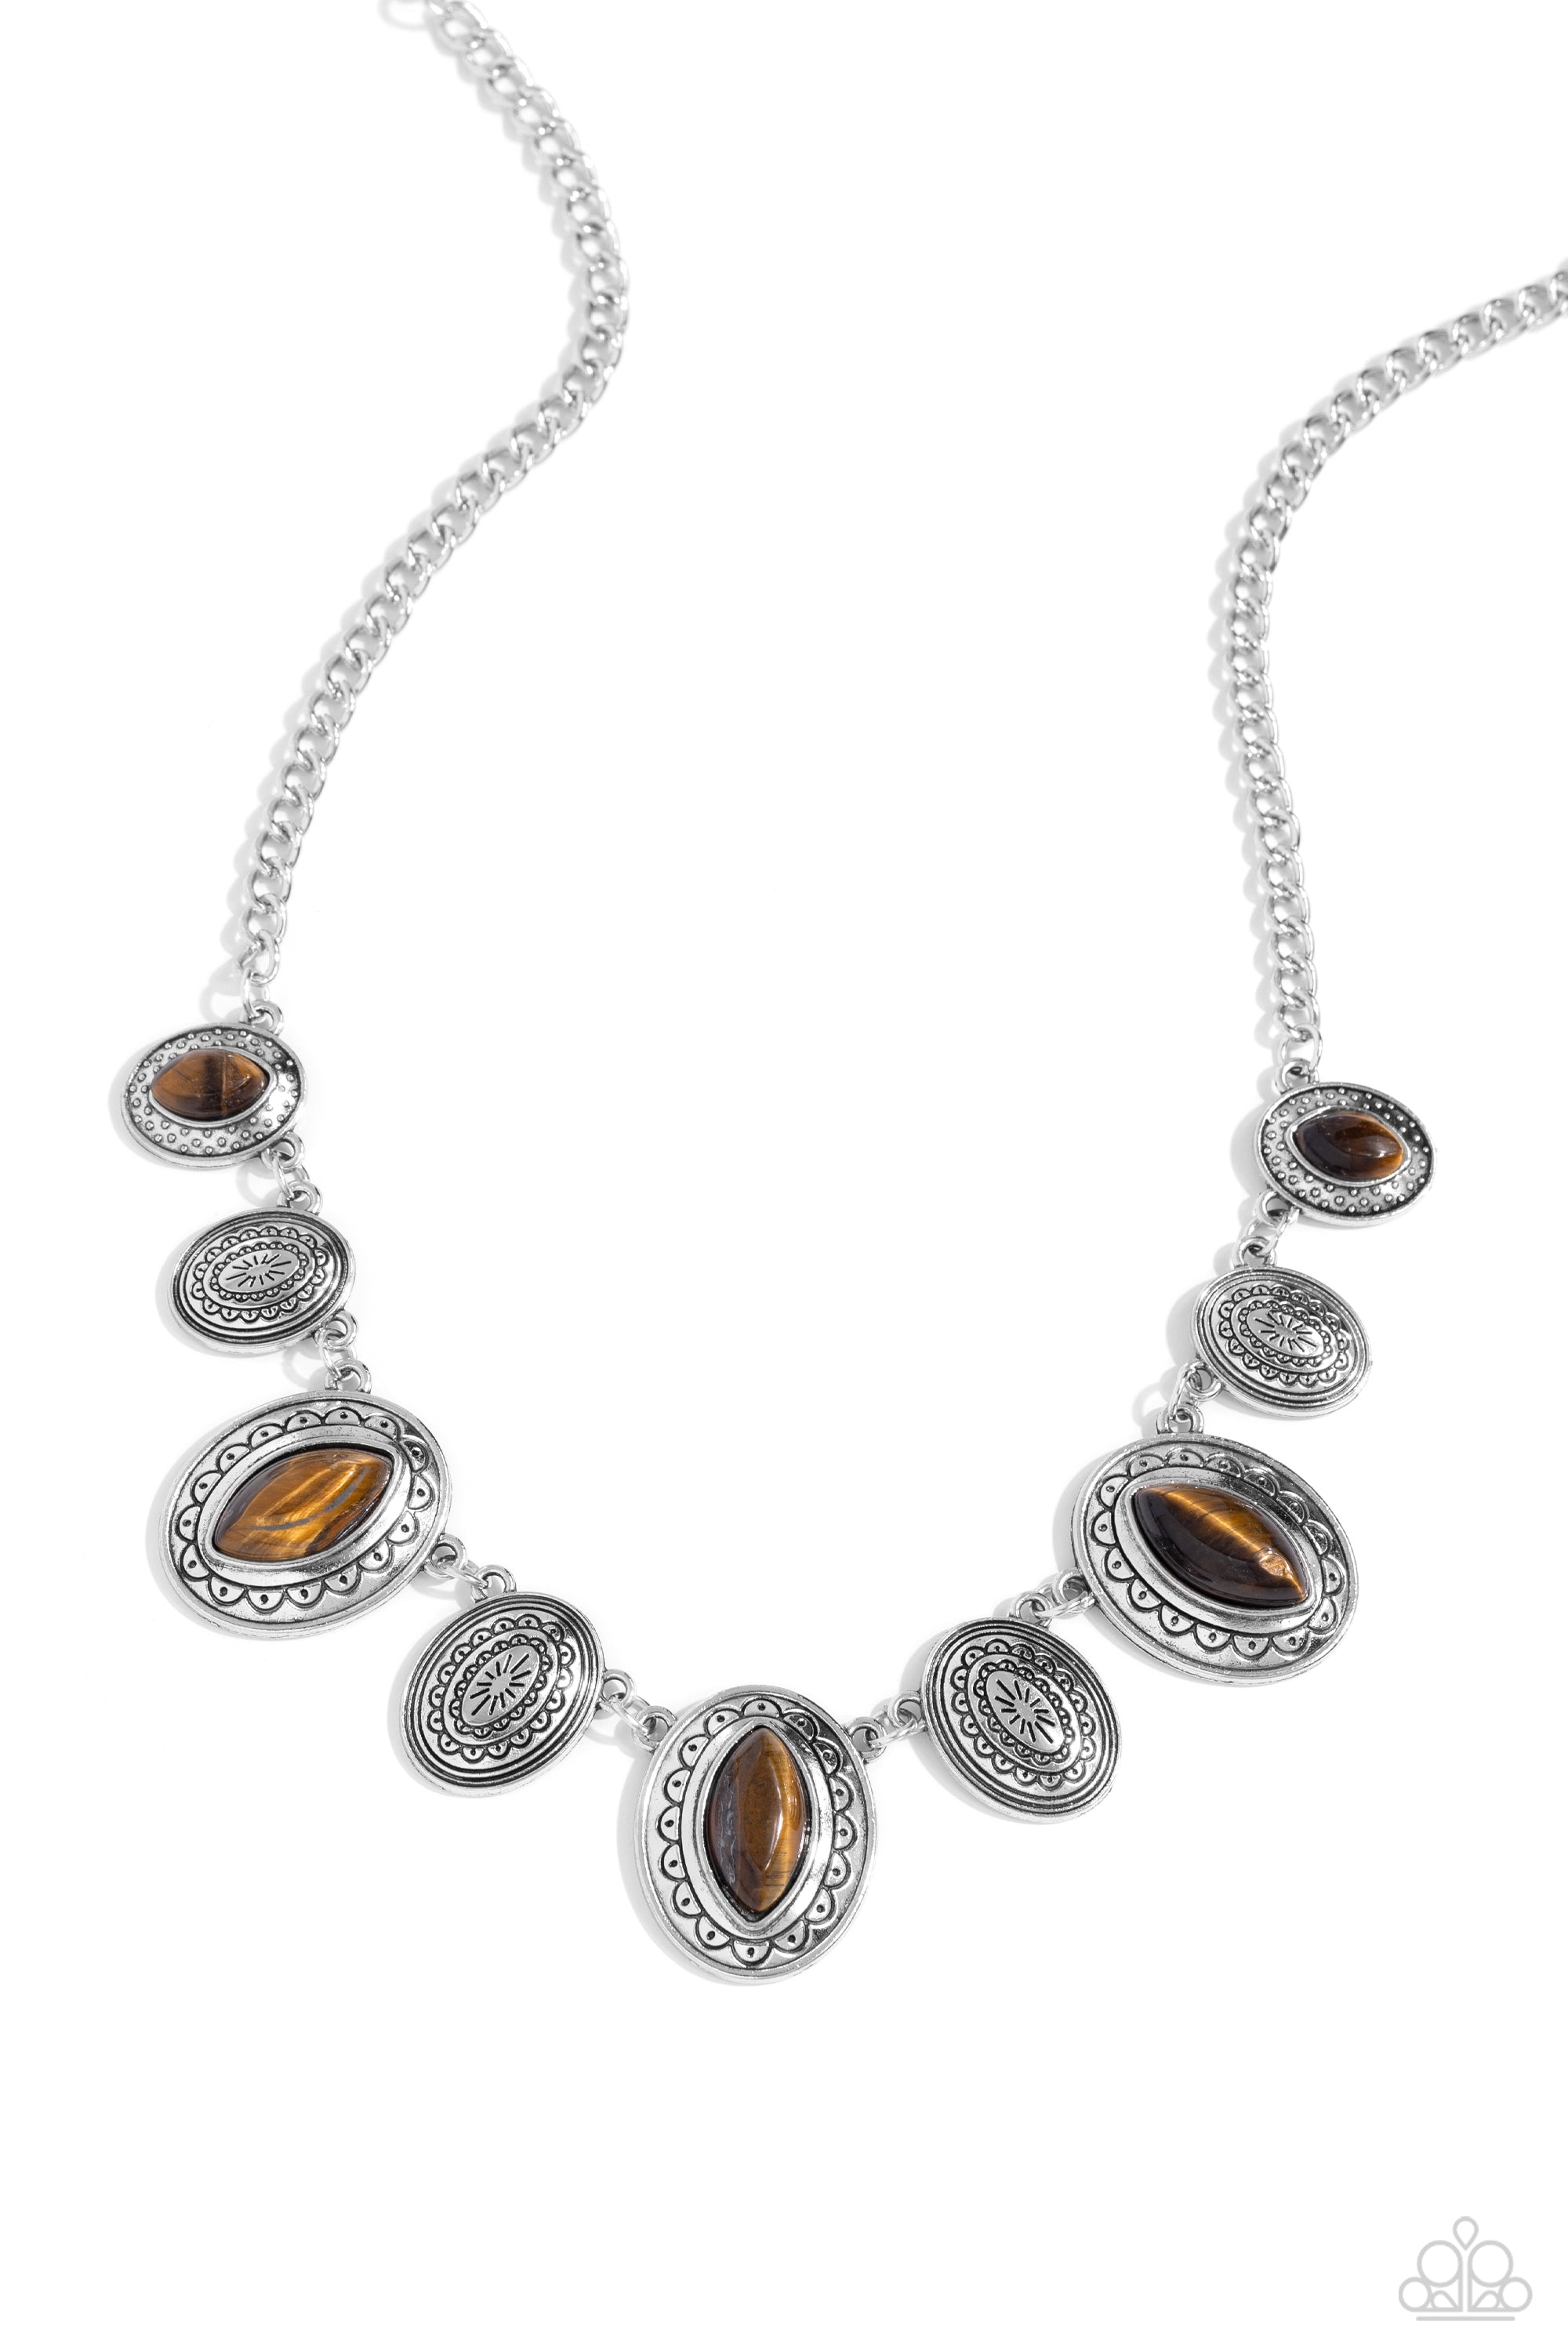 Textured Trailblazer Brown Tiger's Eye Stone Necklace - Paparazzi Accessories- lightbox - CarasShop.com - $5 Jewelry by Cara Jewels